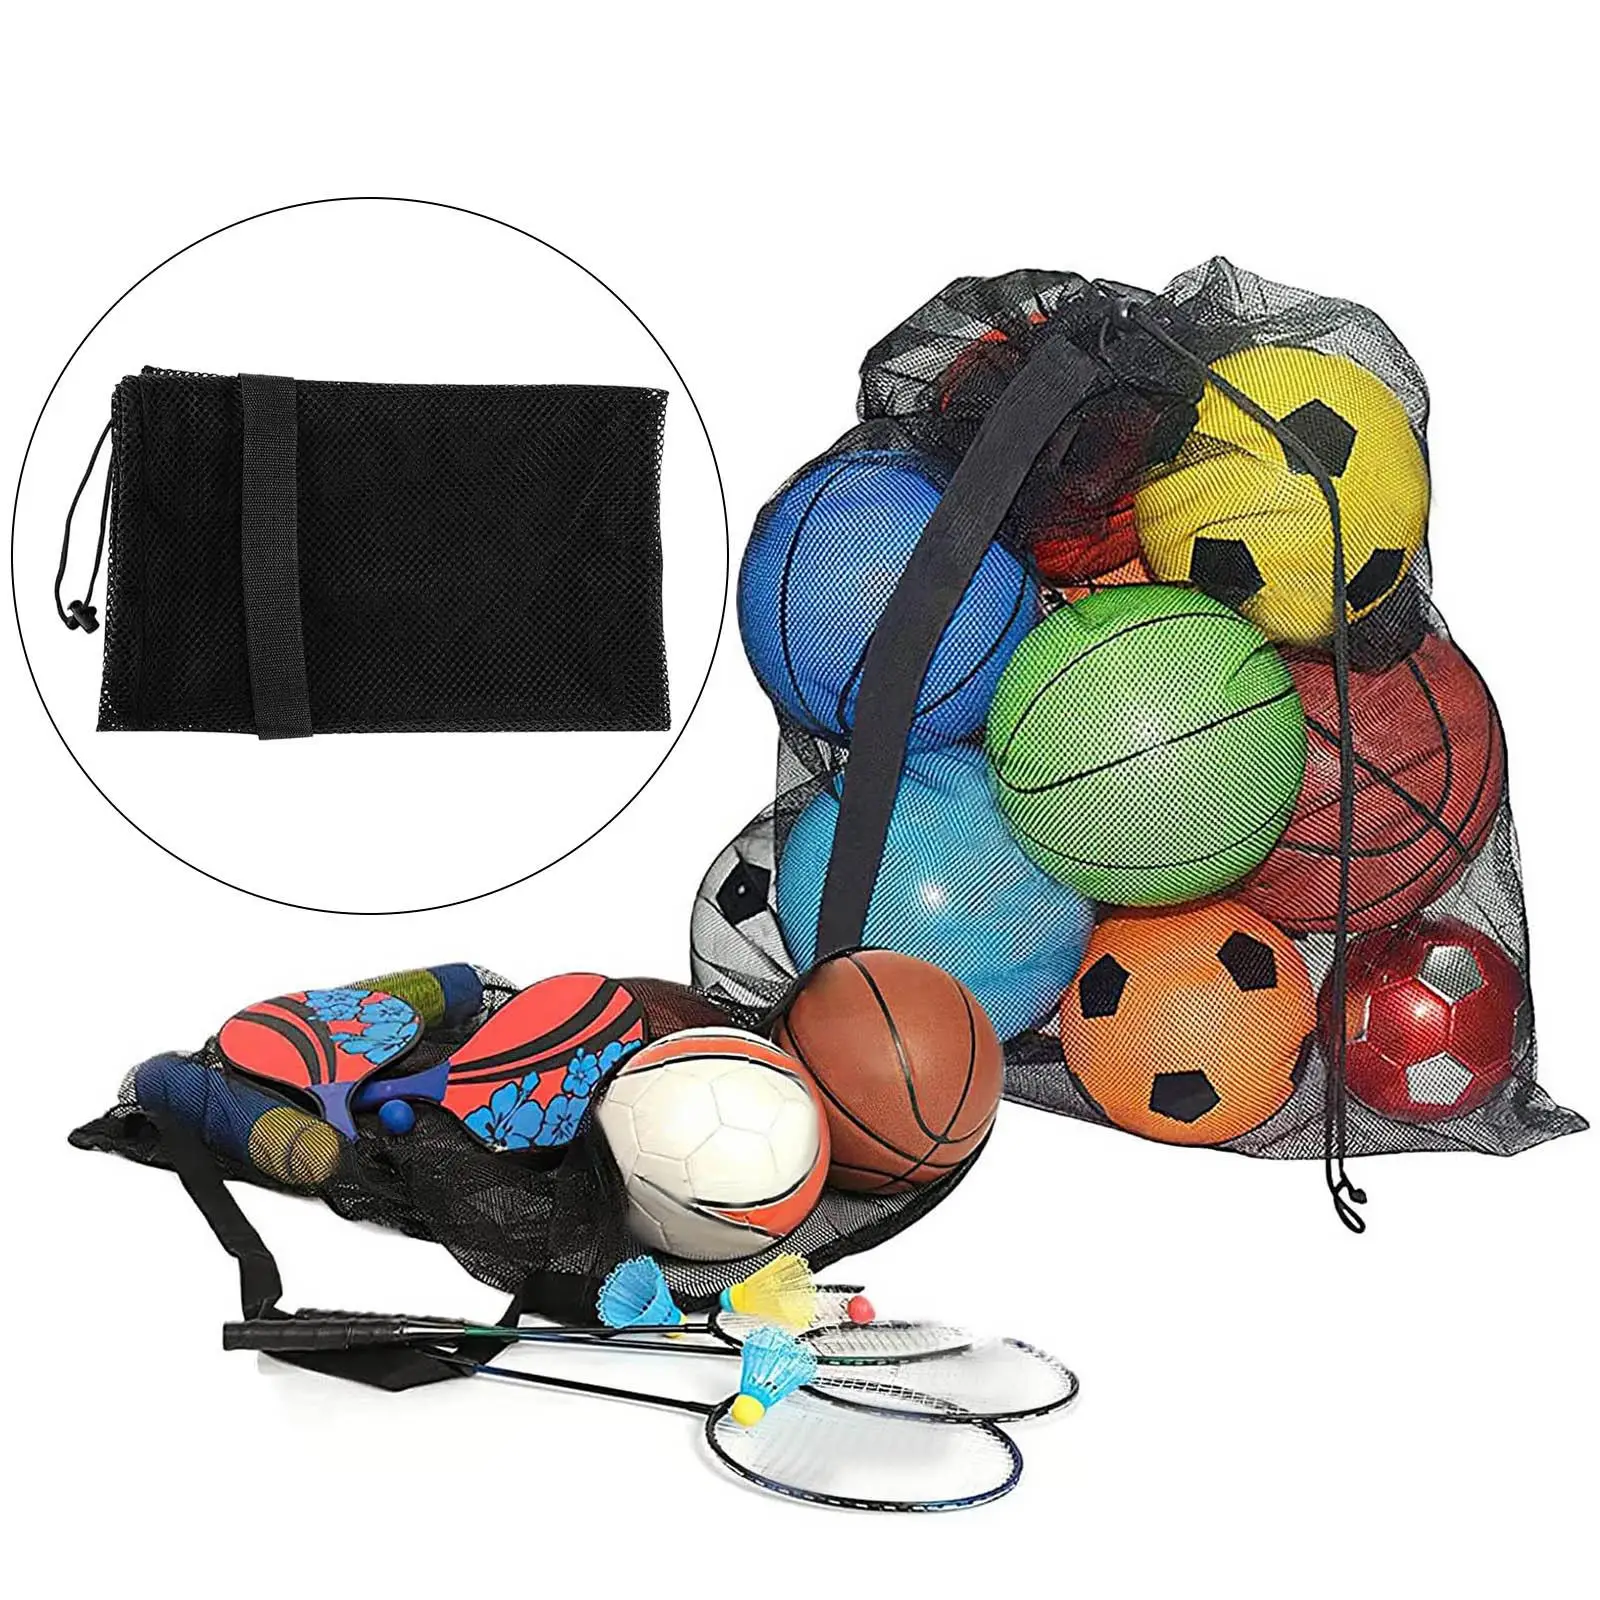 Mesh Ball Bag Gym Sport Equipment Storage Large Heavy Duty Sturdy Hold 13 Soccer